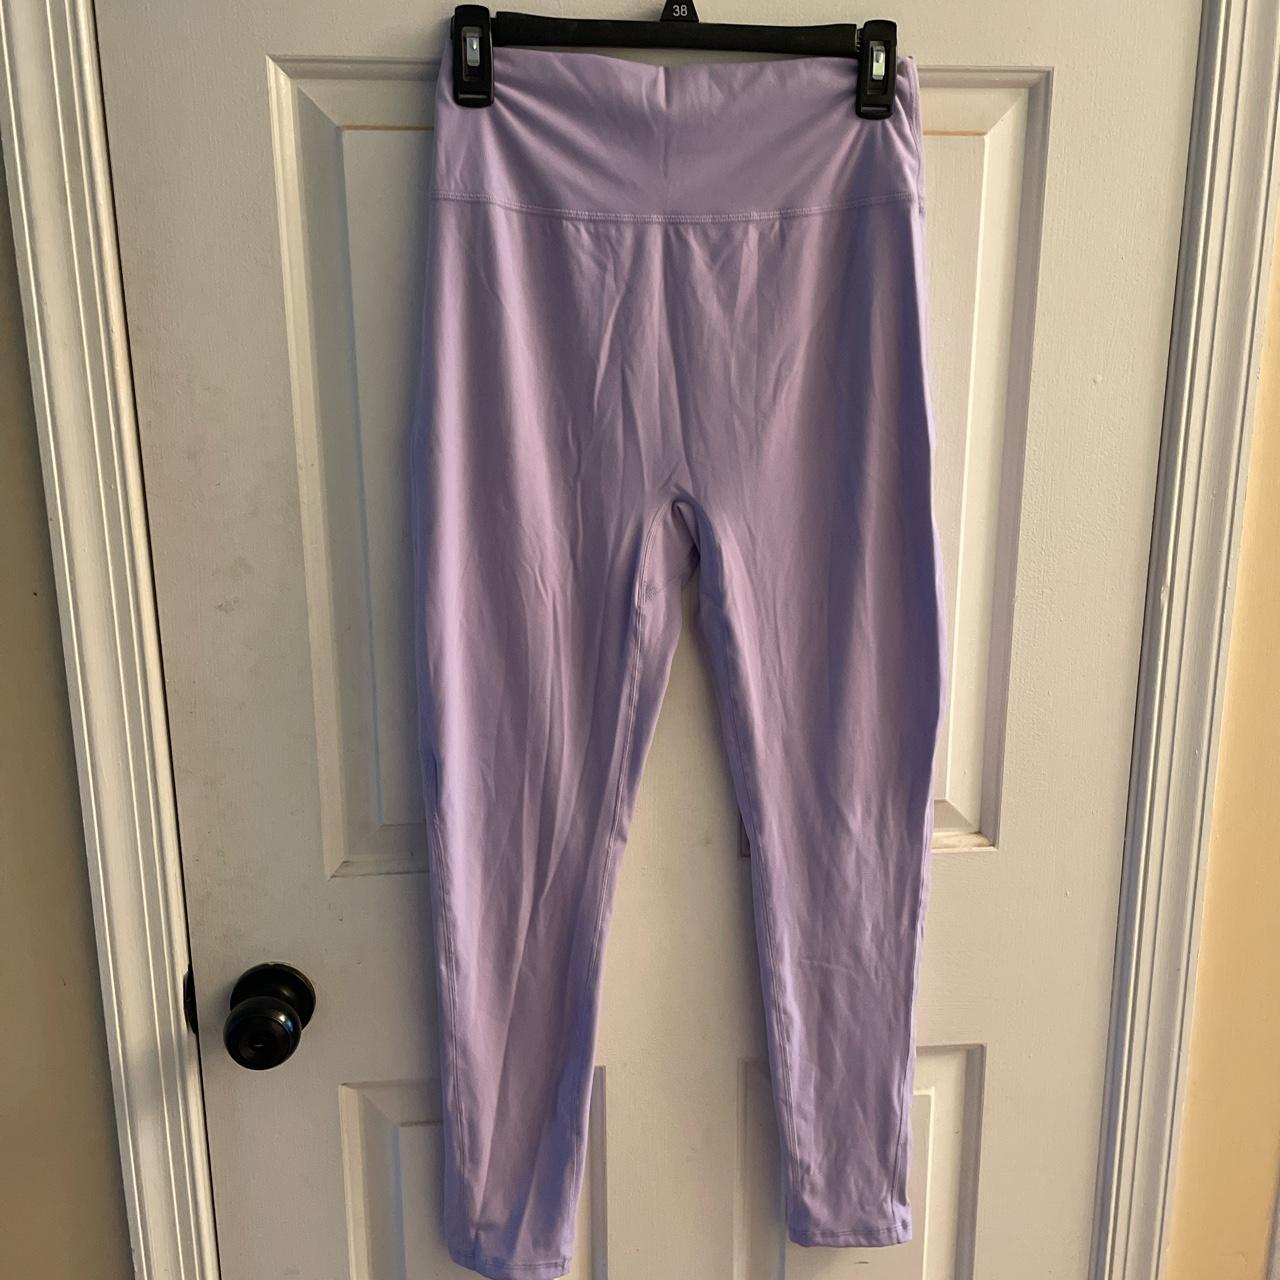 Buffbunny Legacy Leggings, XL in Frosted Purple, - Depop